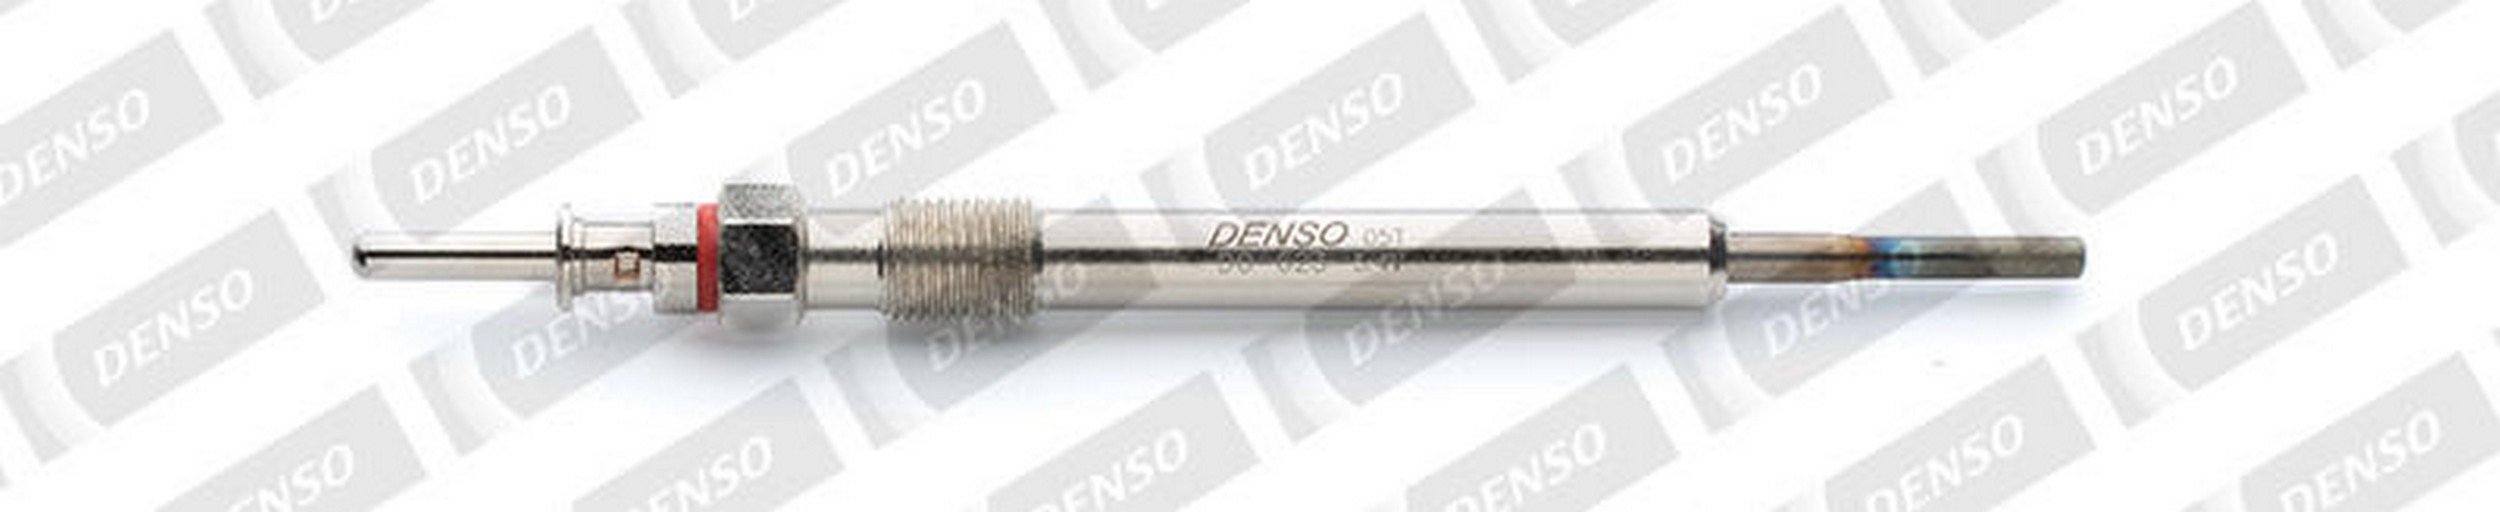 DENSO-AU DG-623